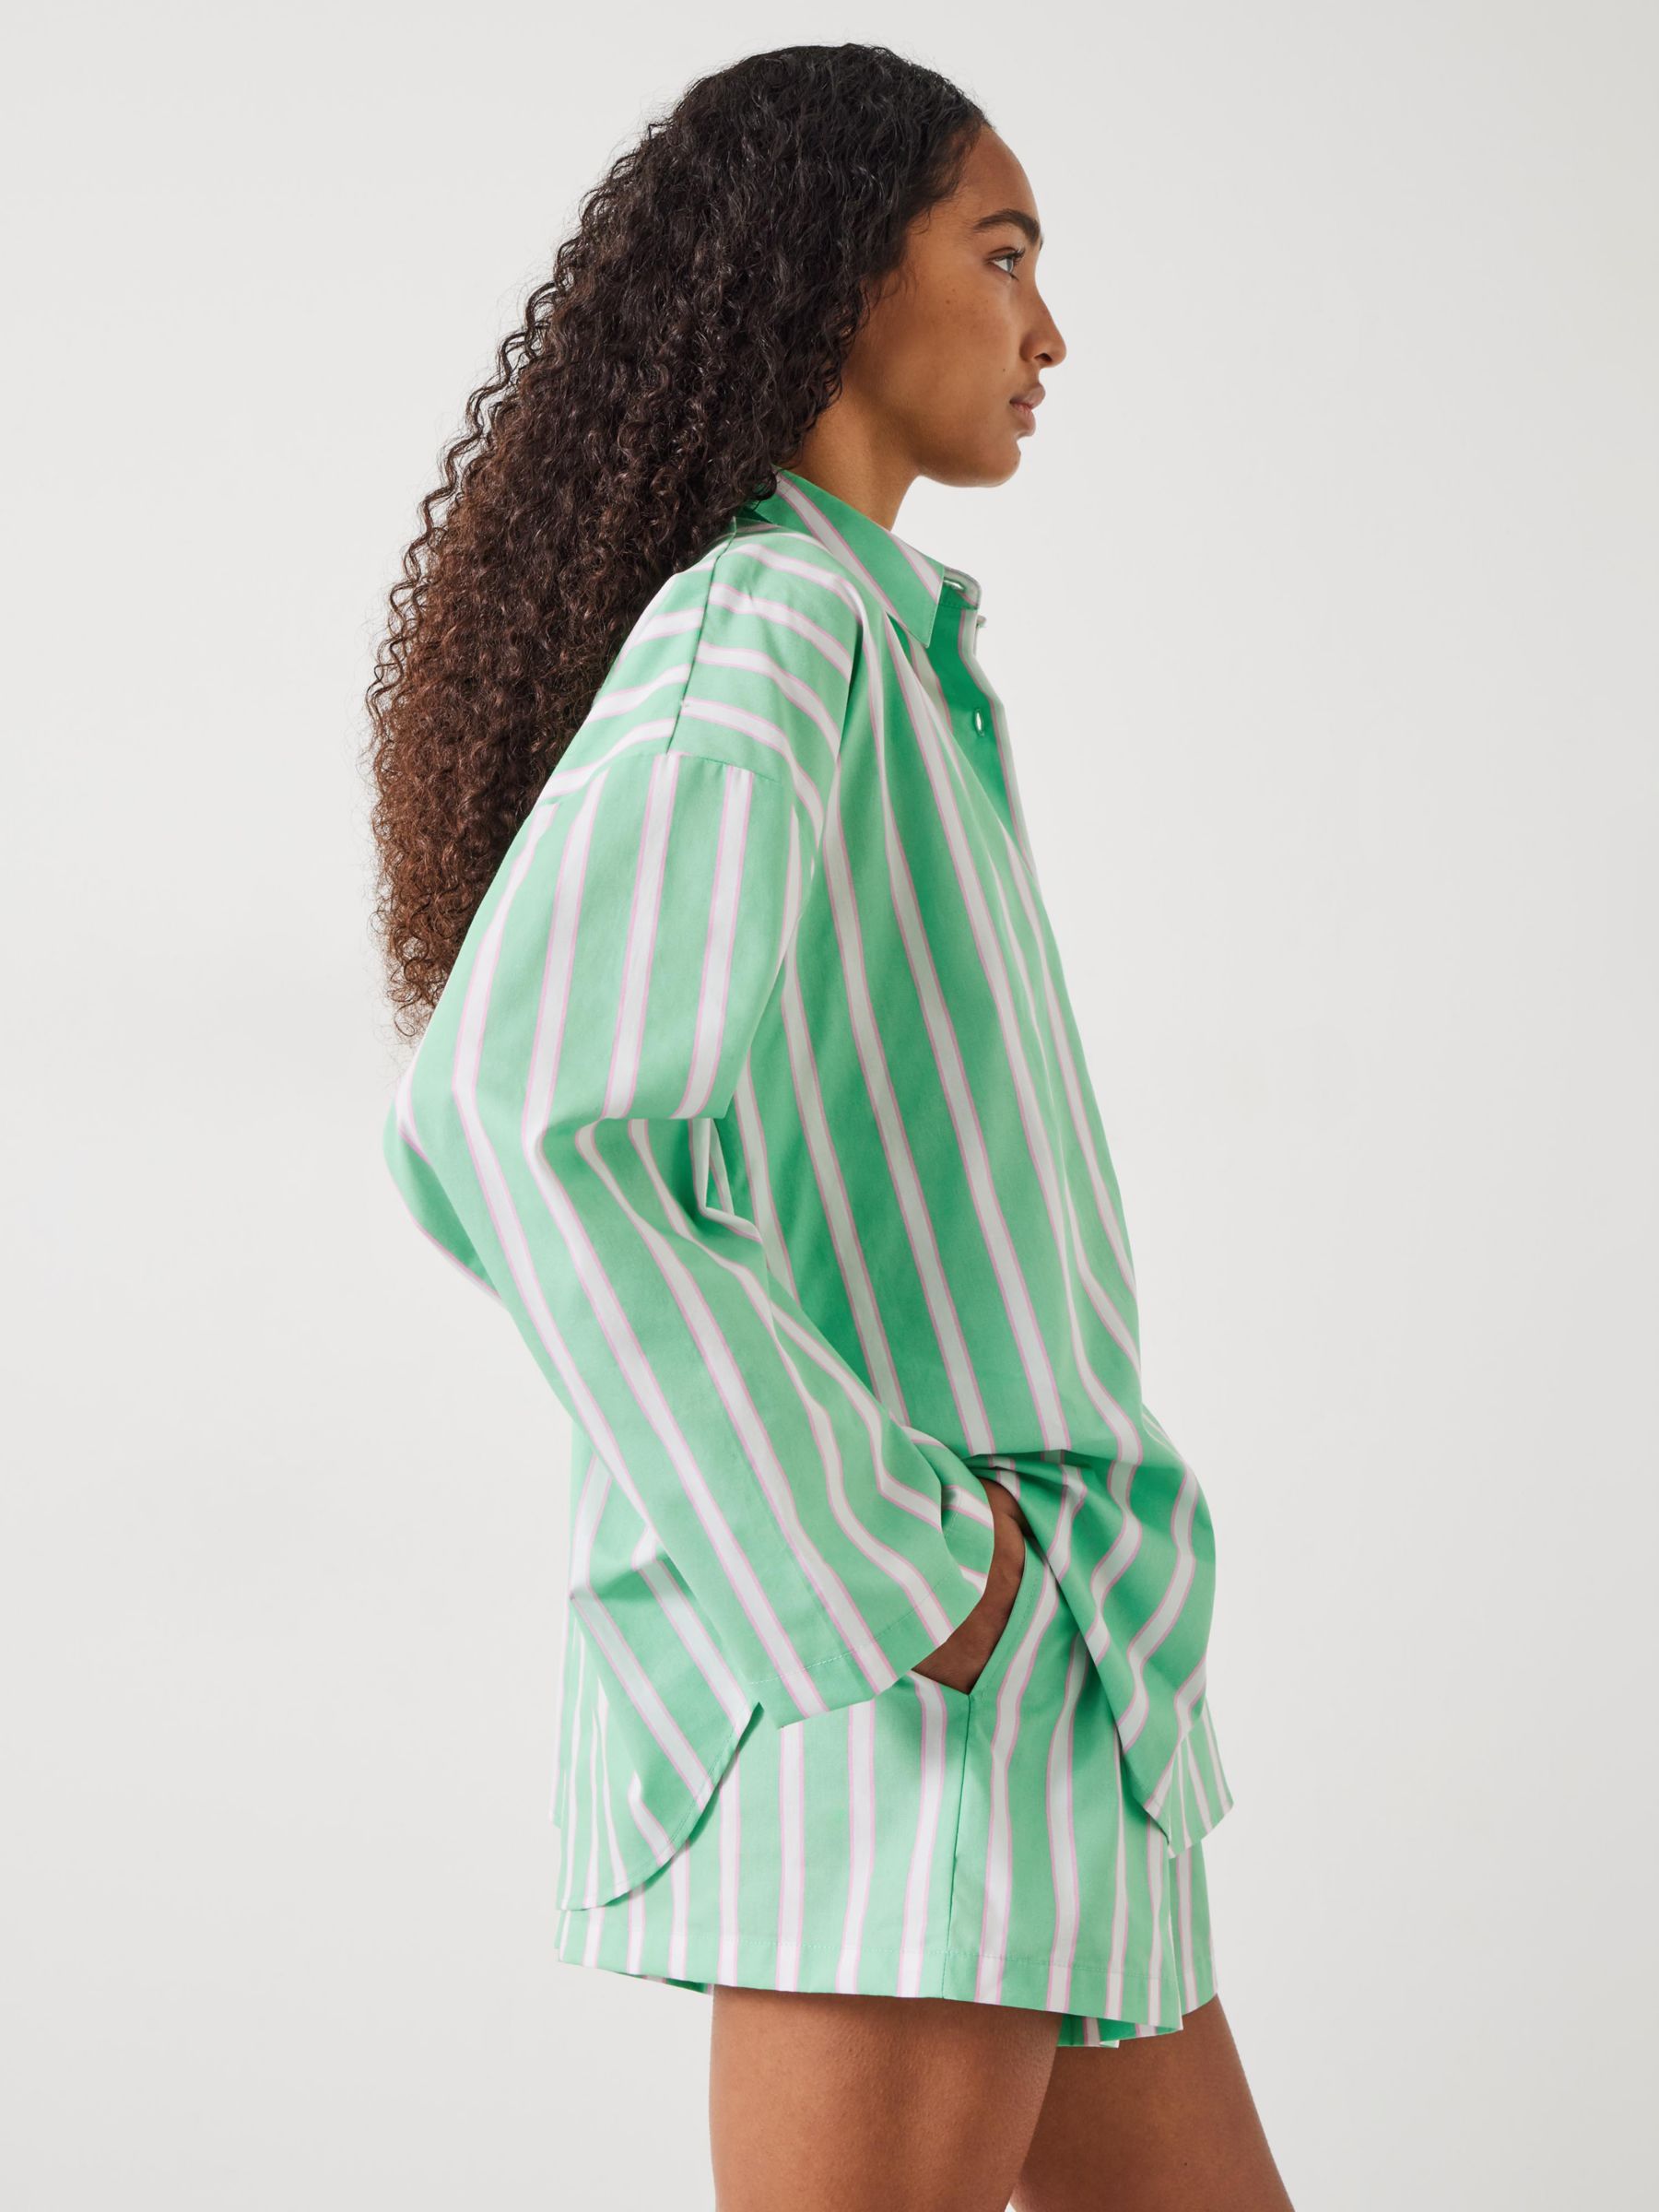 HUSH Adair Oversized Shirt and Shorts Pyjama Set, Green/Pink, M